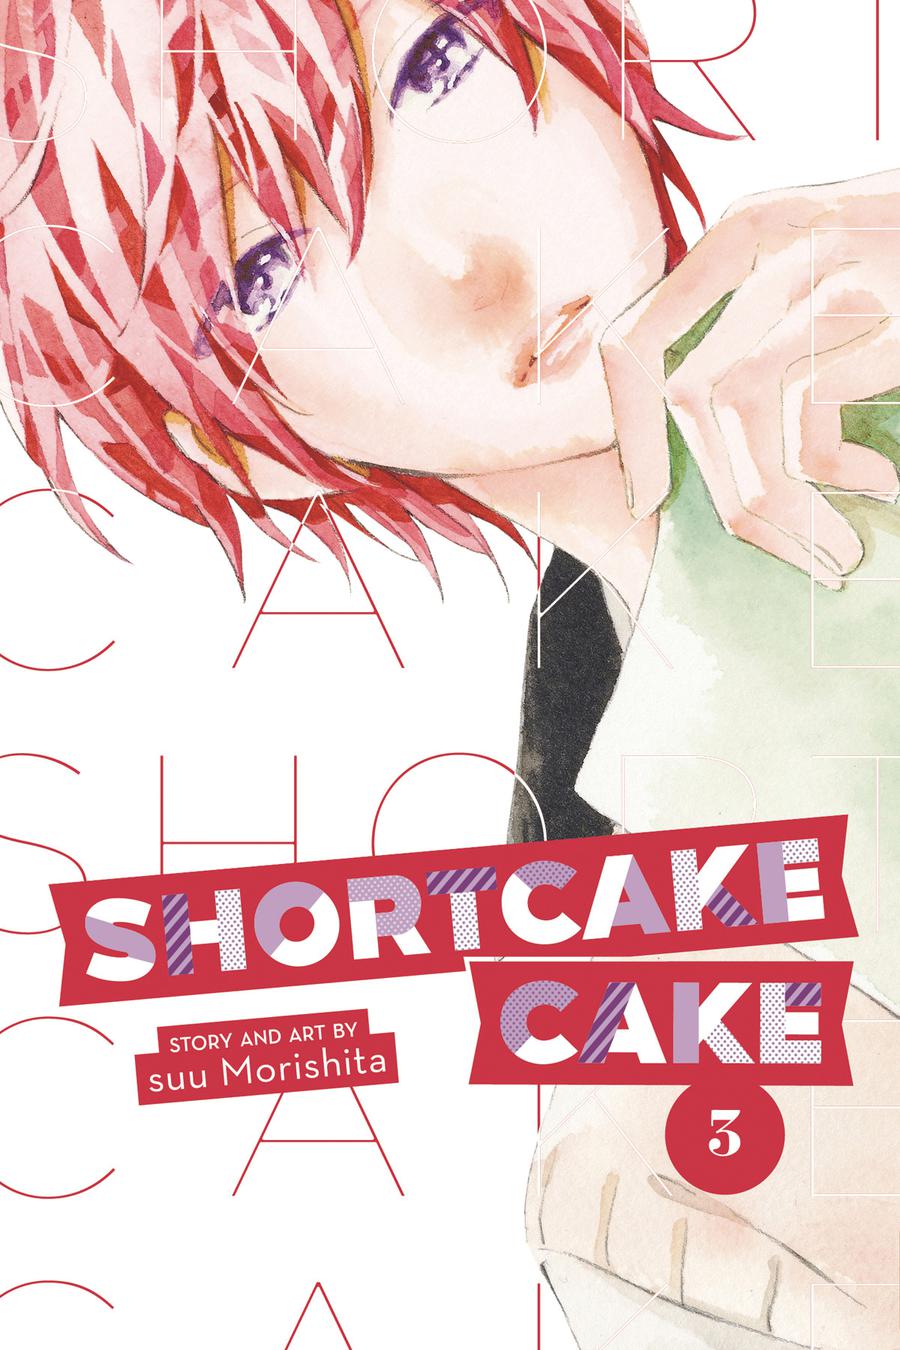 Shortcake Cake Vol 3 GN